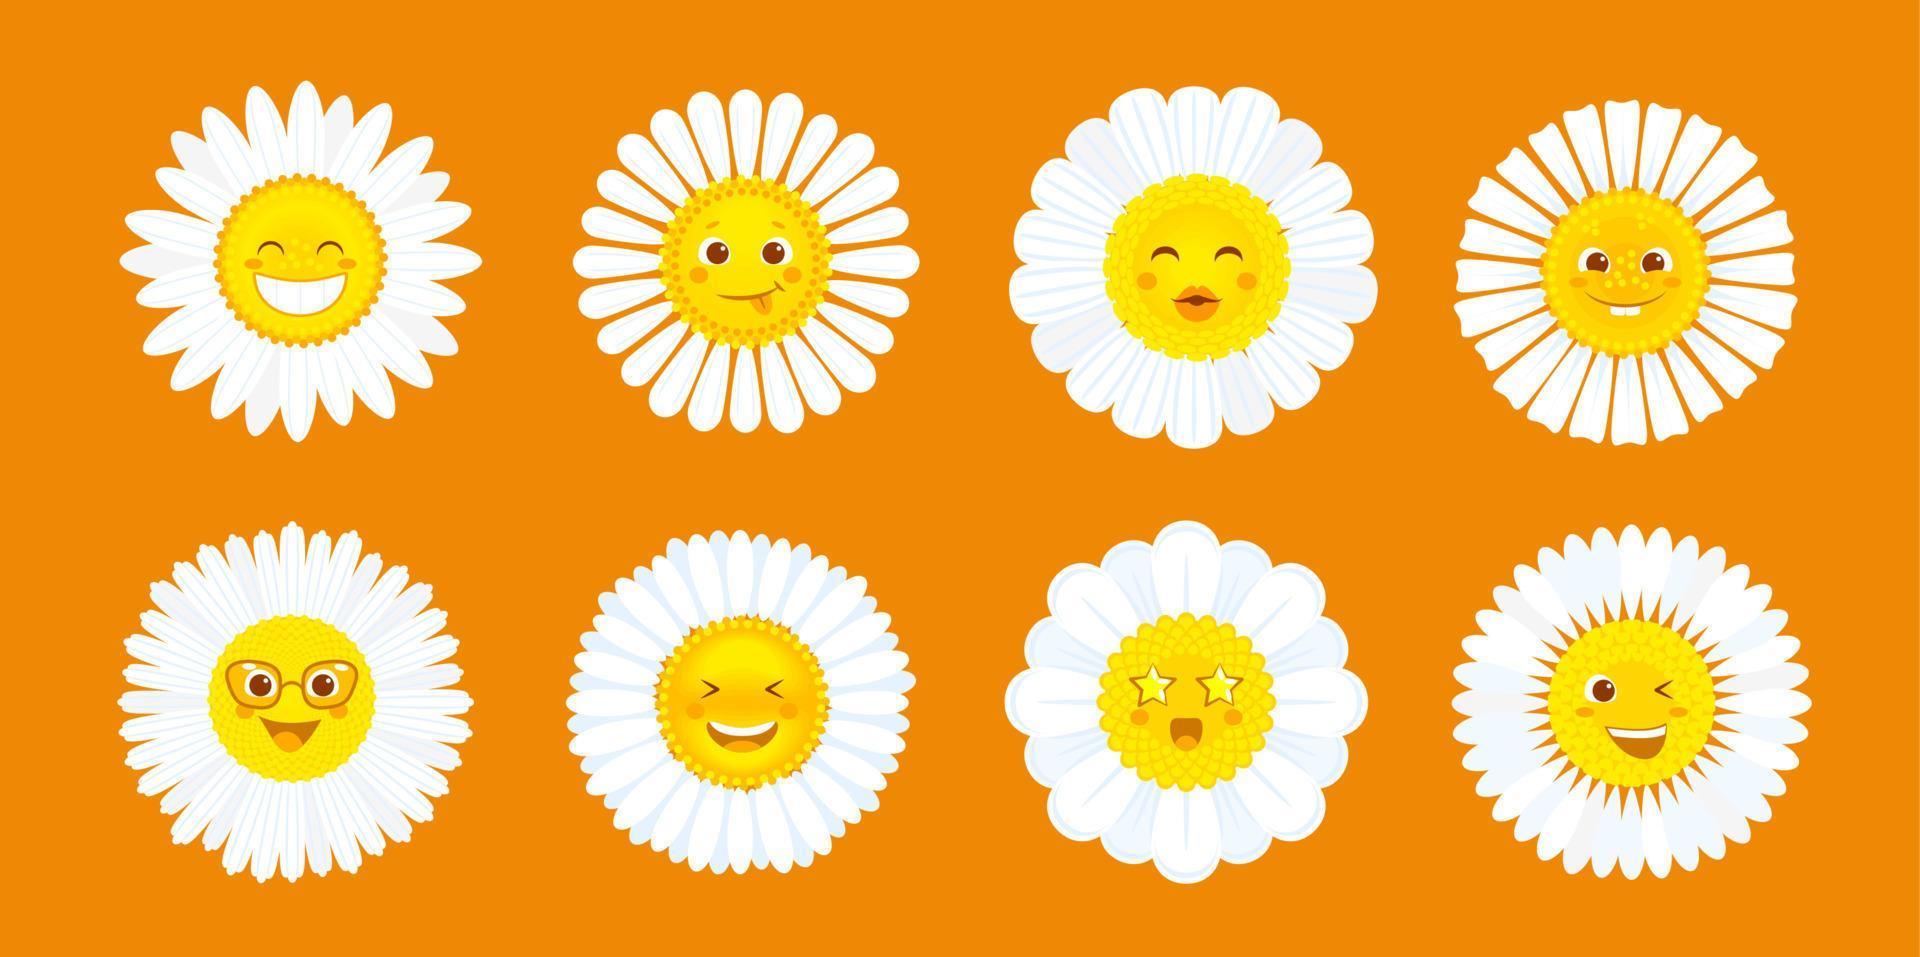 Cartoon cute camomiles or daisy flowers characters vector